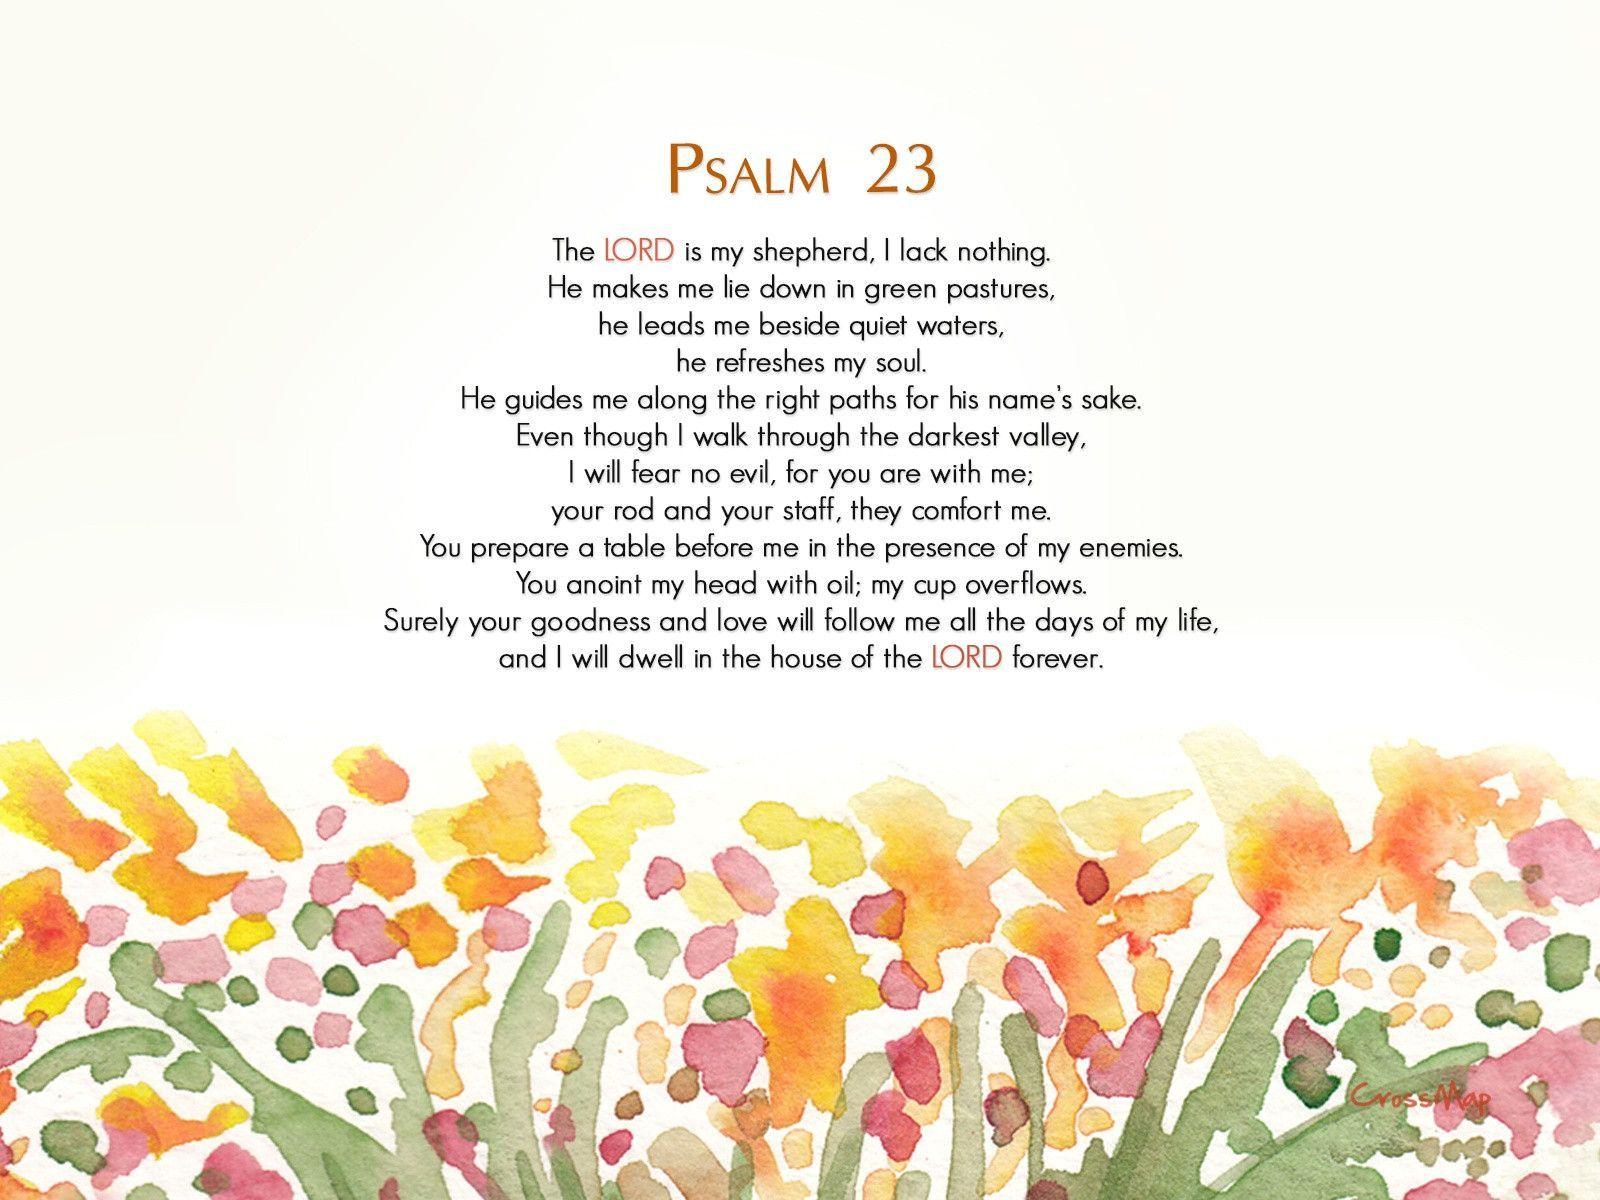 Psalm 23 poster design by PitoDaBest on DeviantArt